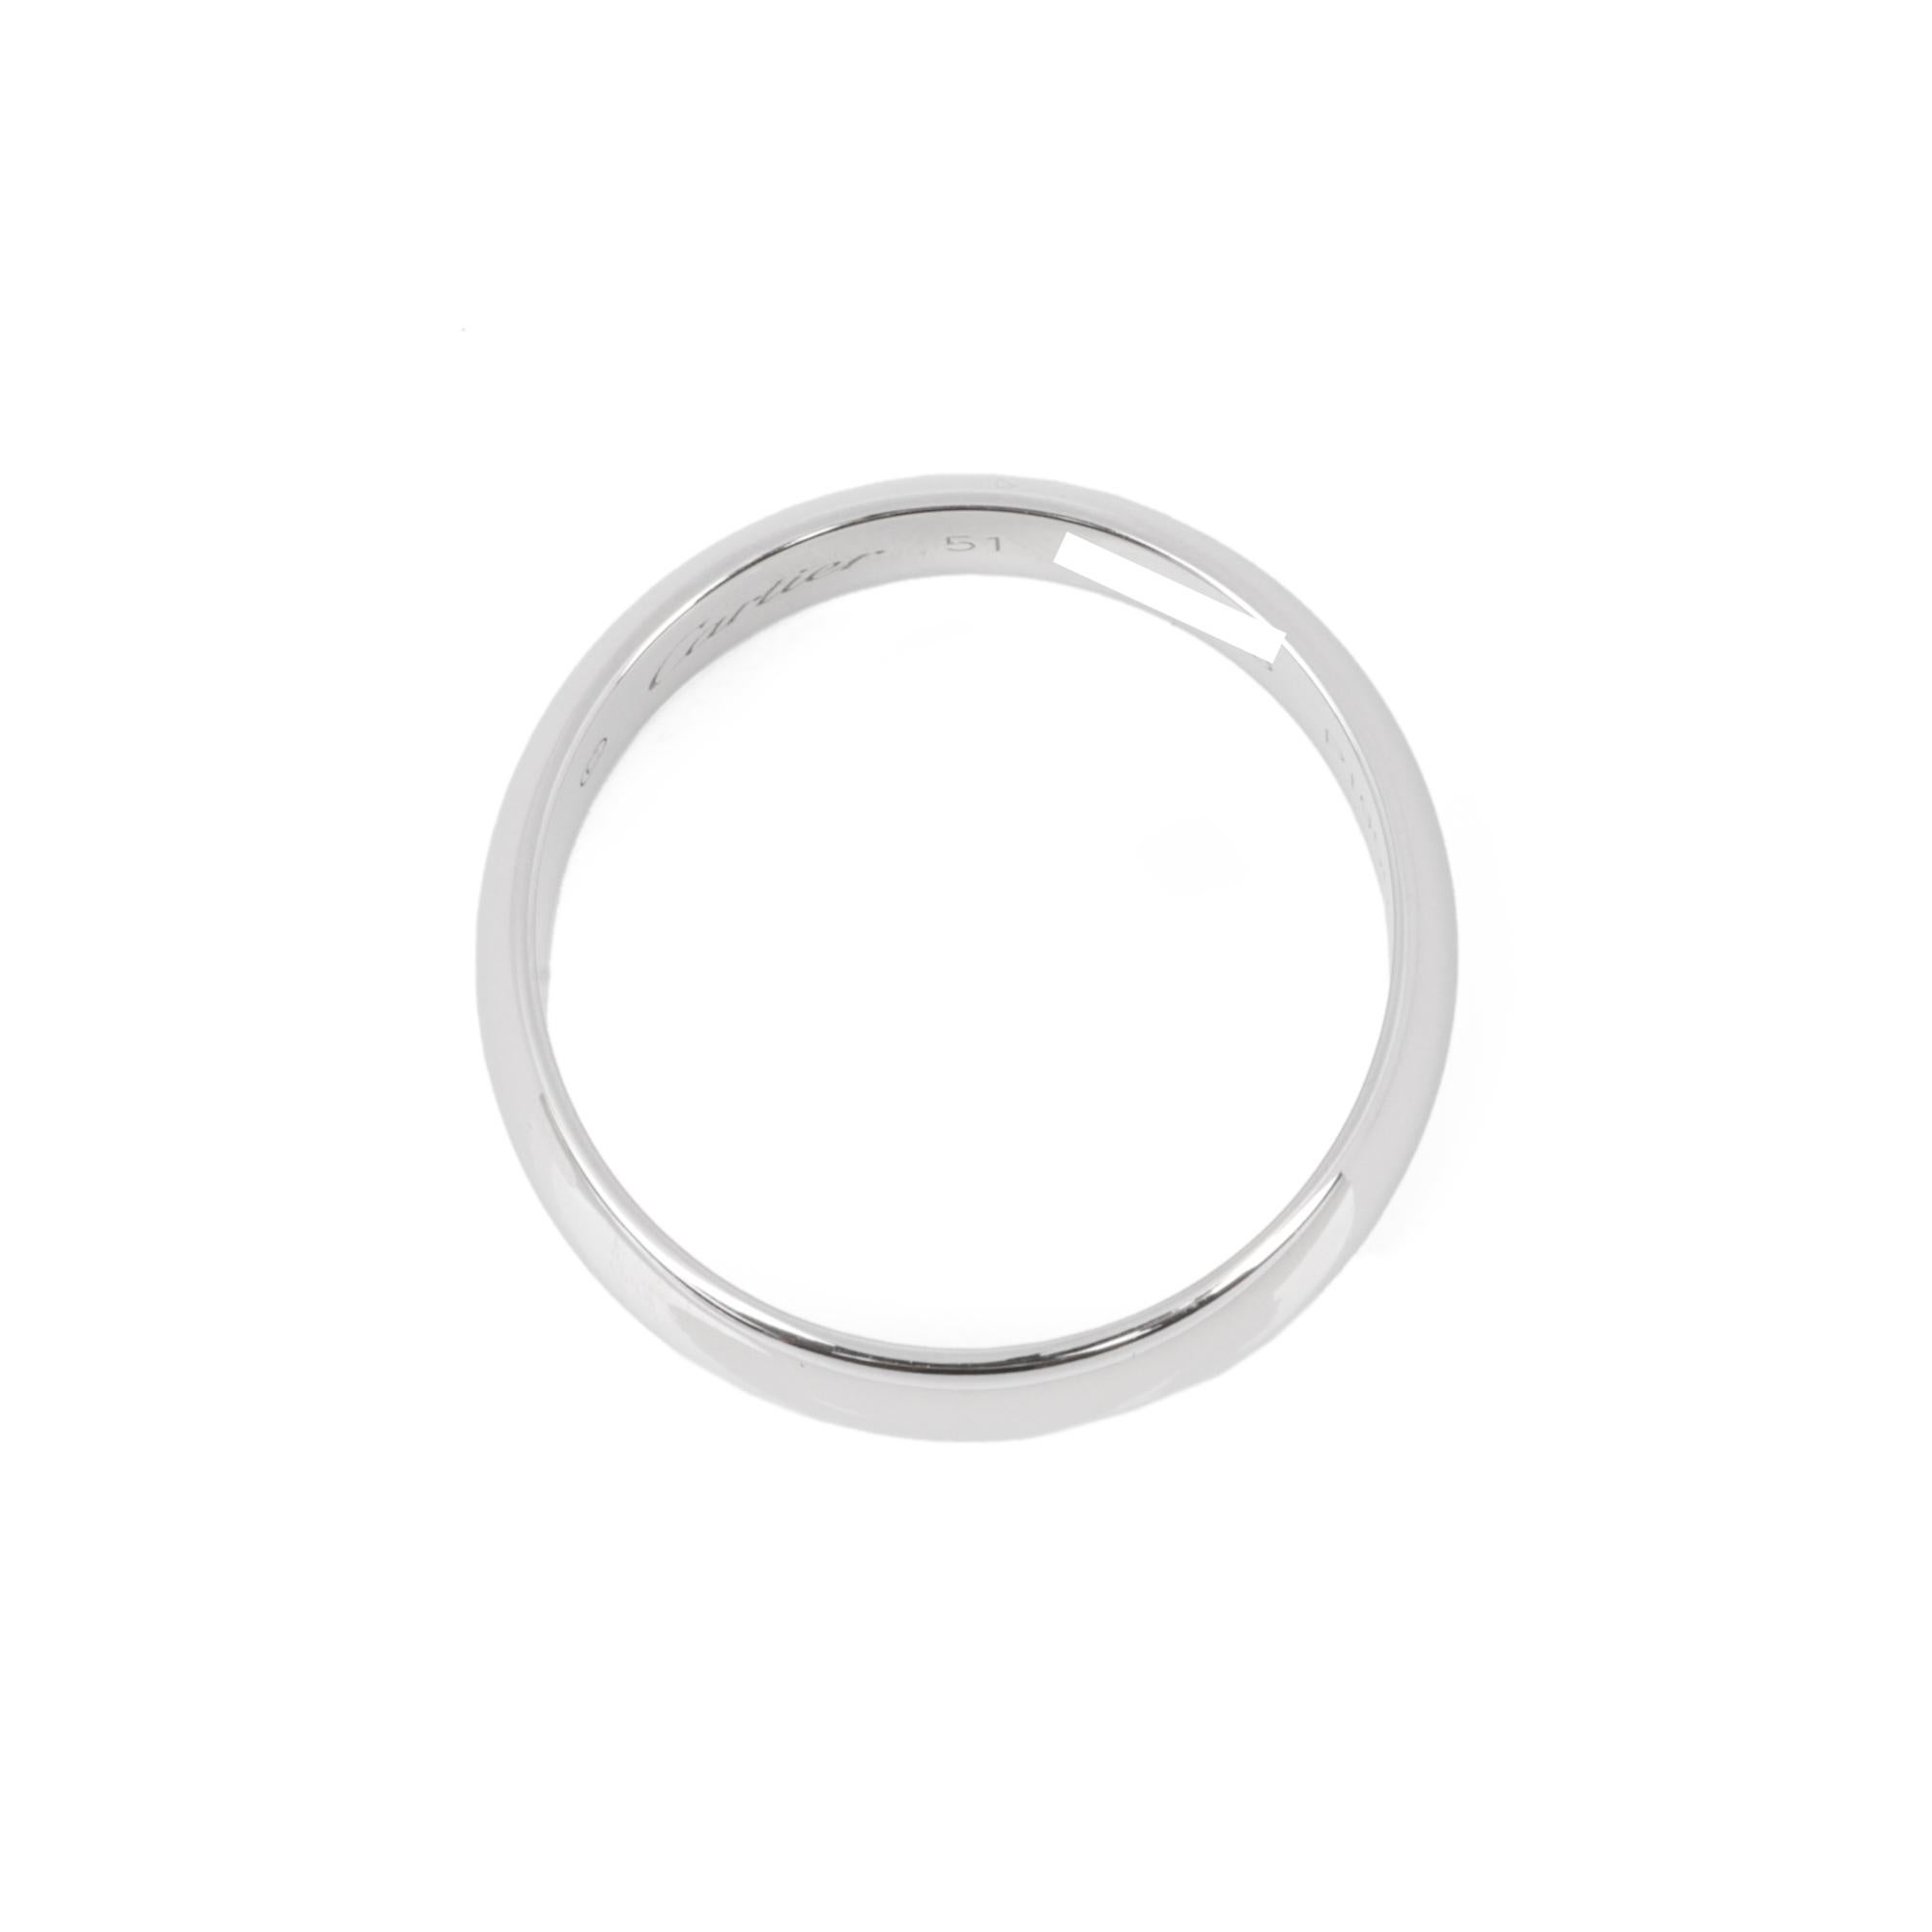 5mm cartier ring